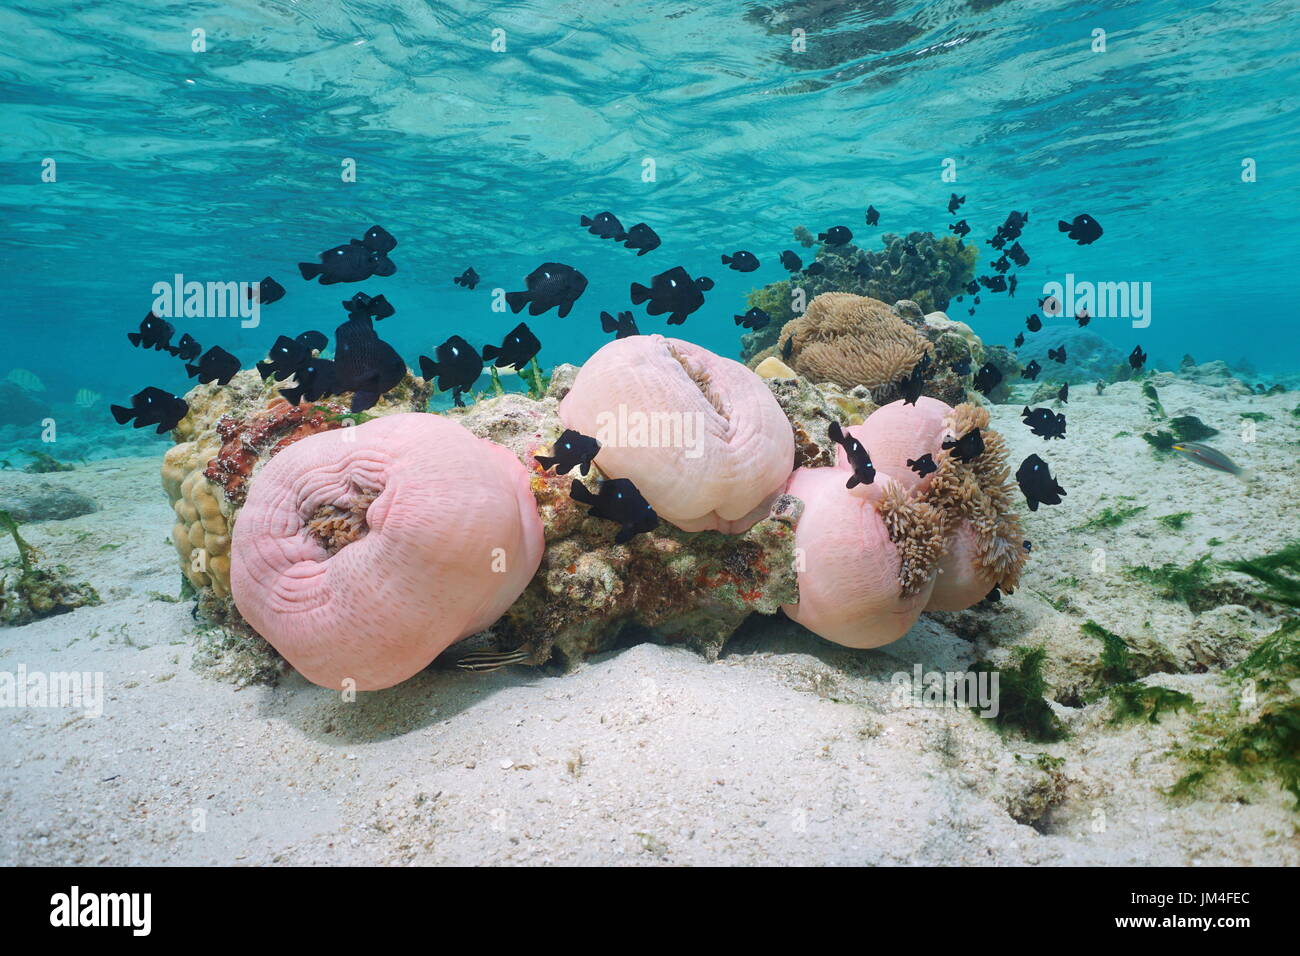 Sea anemones with fish threespot dascyllus damselfish, underwater in the lagoon of Bora Bora, Pacific ocean, French Polynesia, Oceania Stock Photo